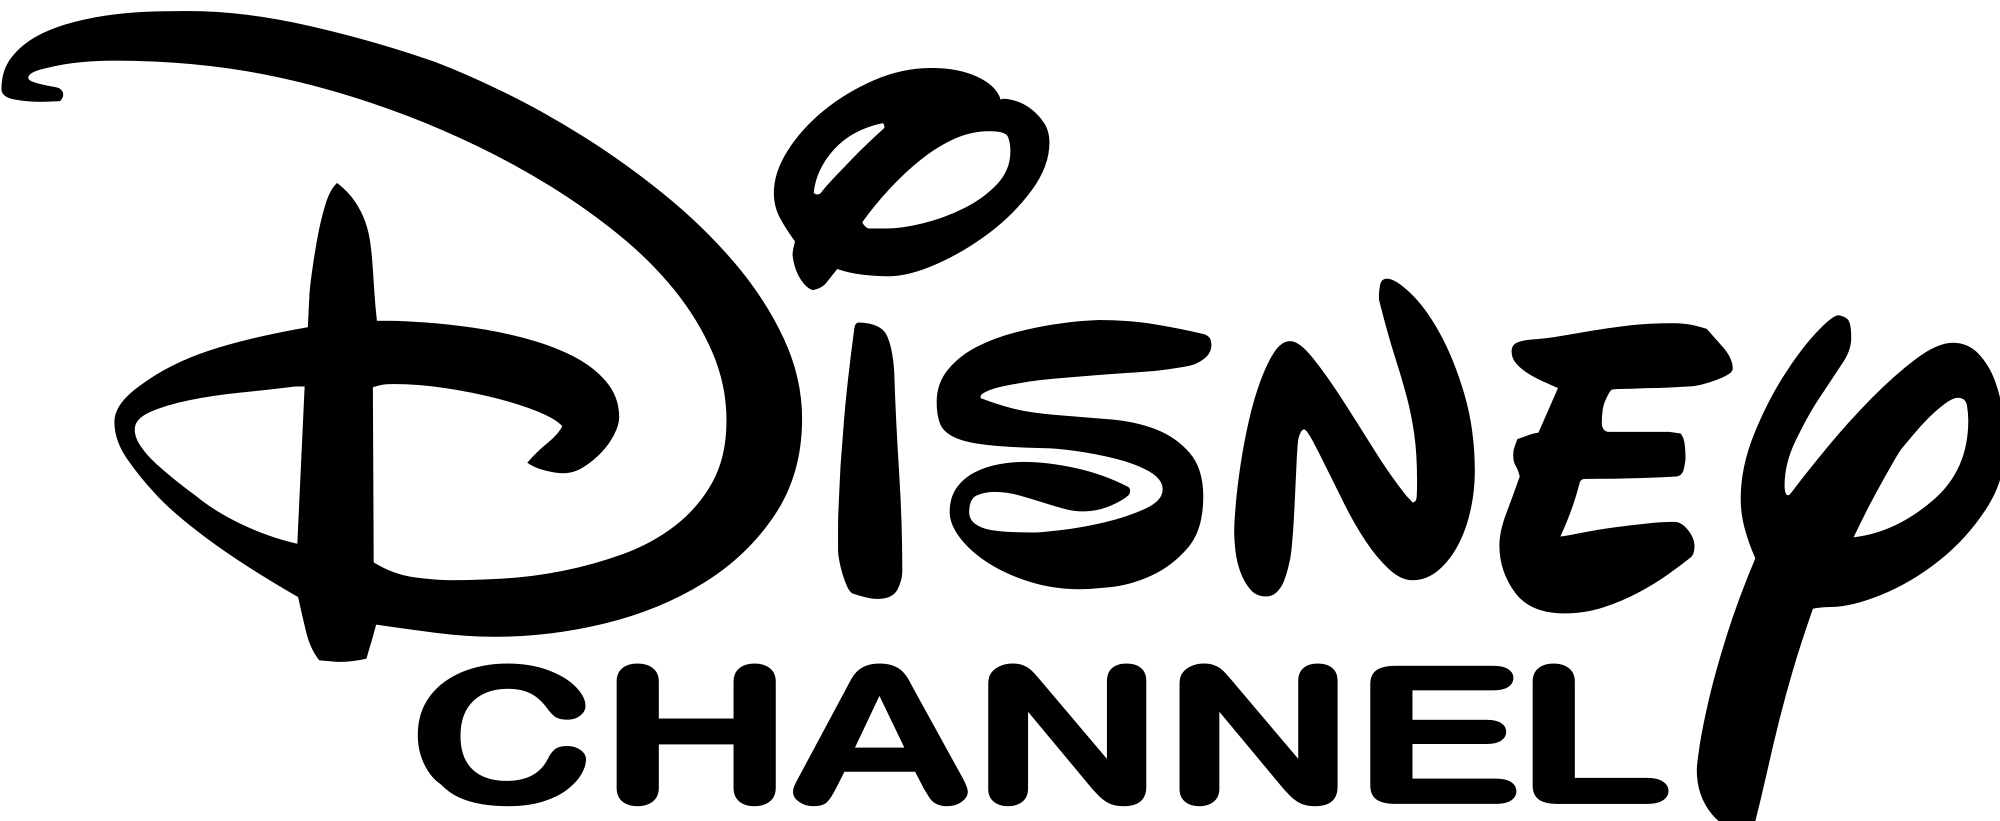 Disney Logotipo Baixar PNG Image